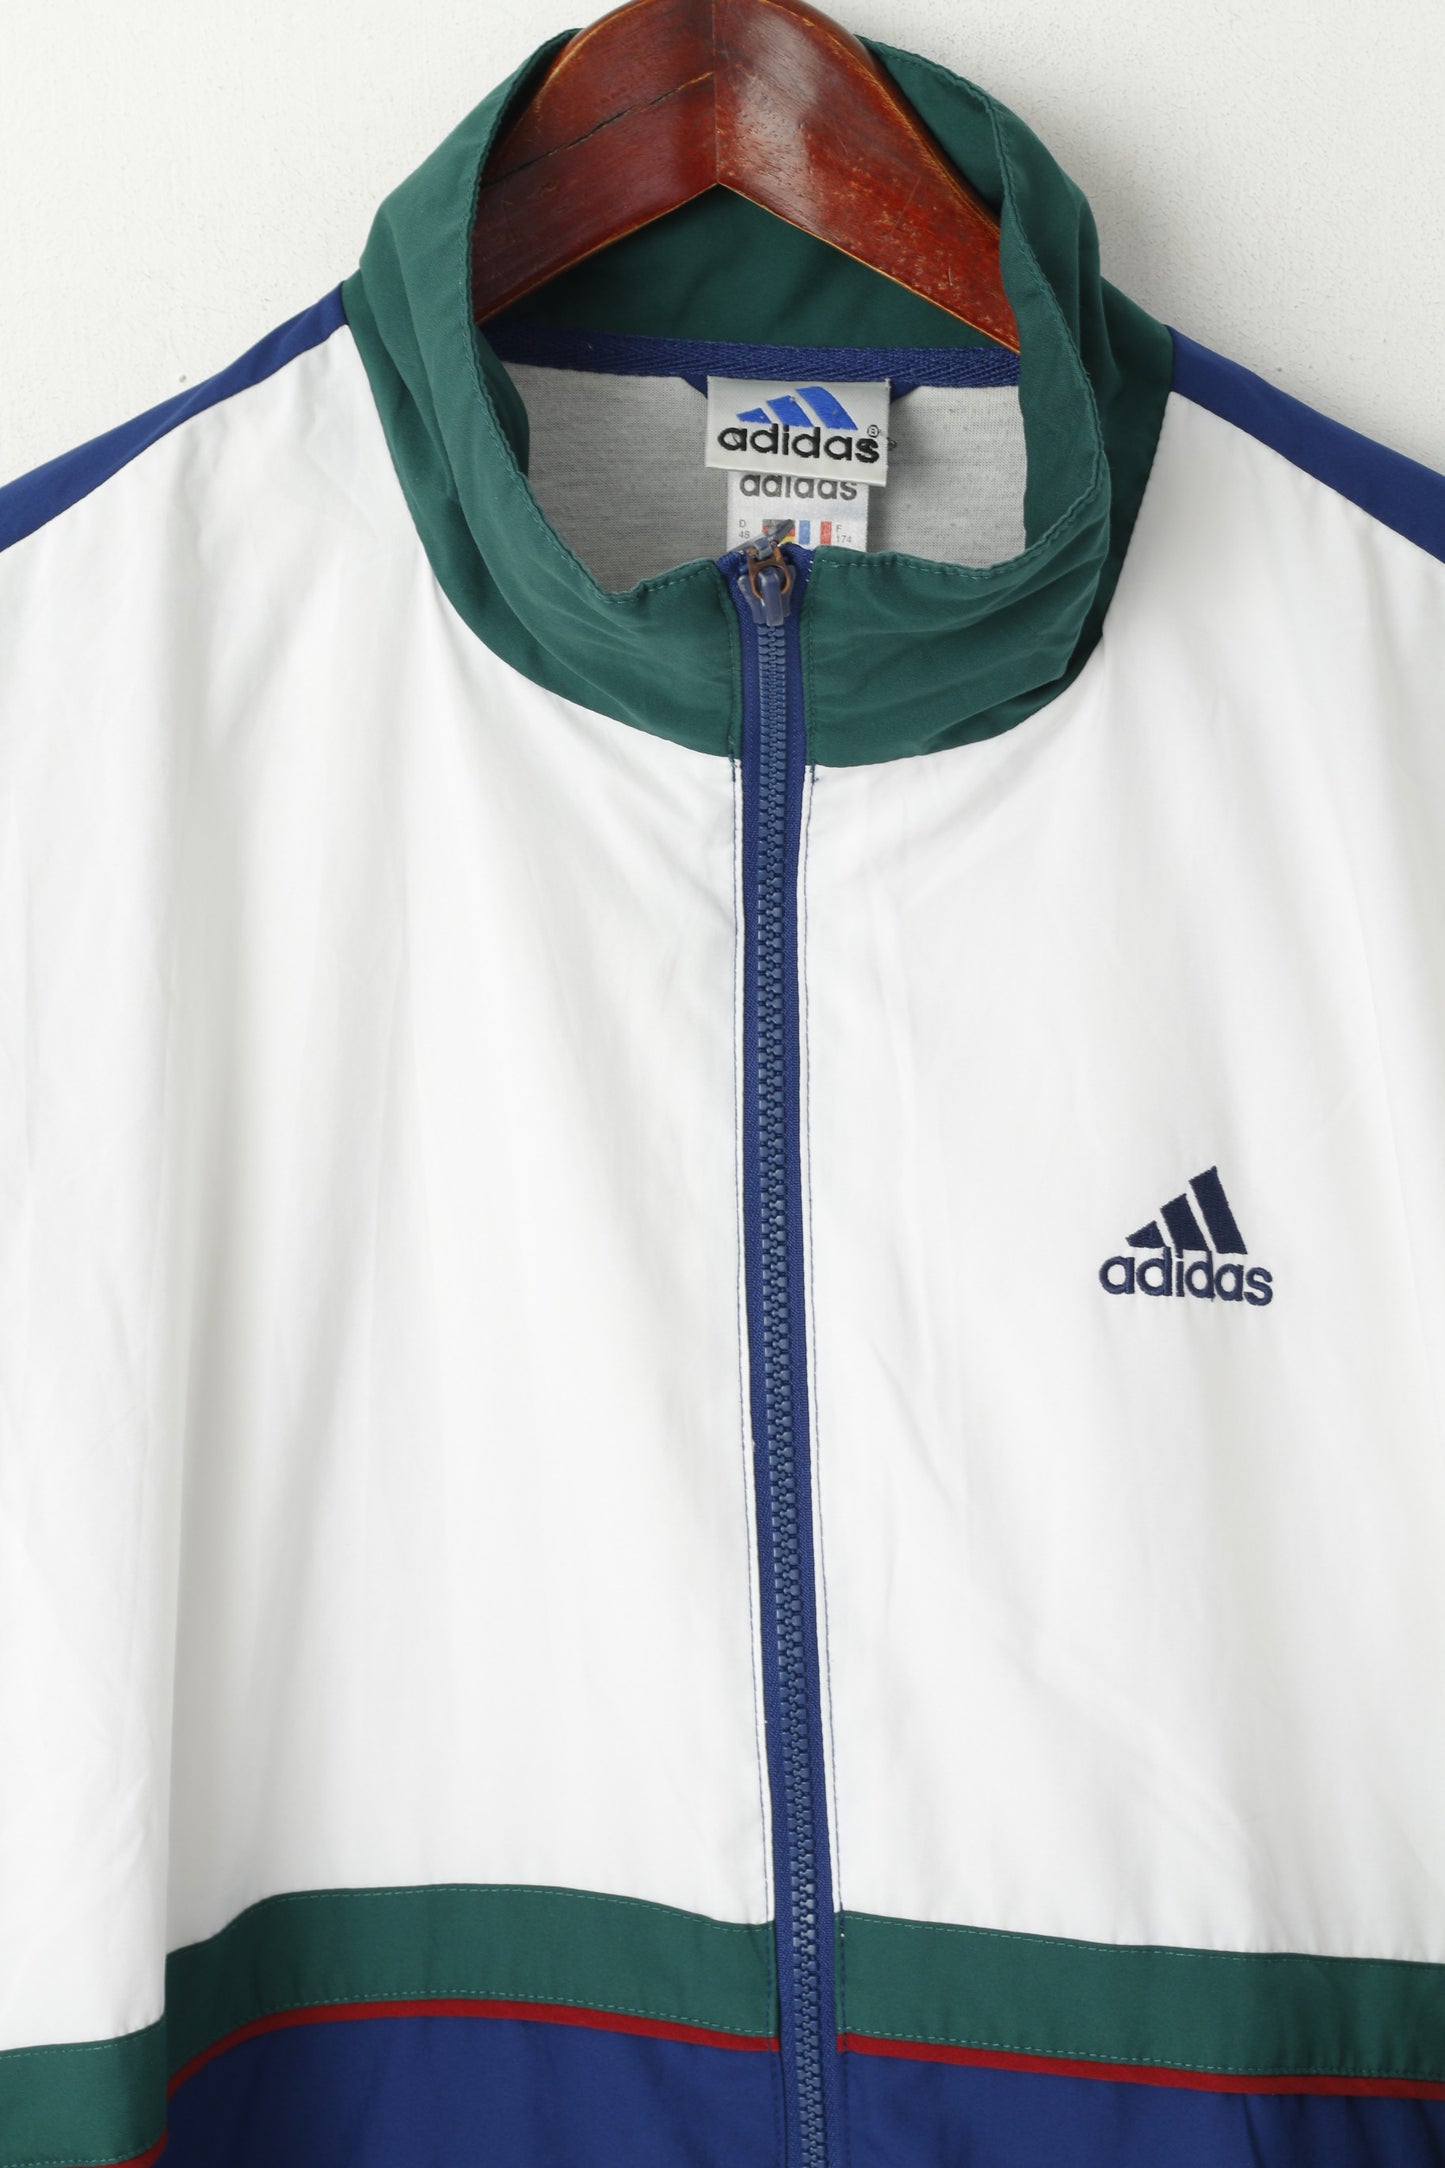 Adidas Hommes M Veste Blanc Marine Bomber Pleine Fermeture Éclair Vintage Sportswear Track Top